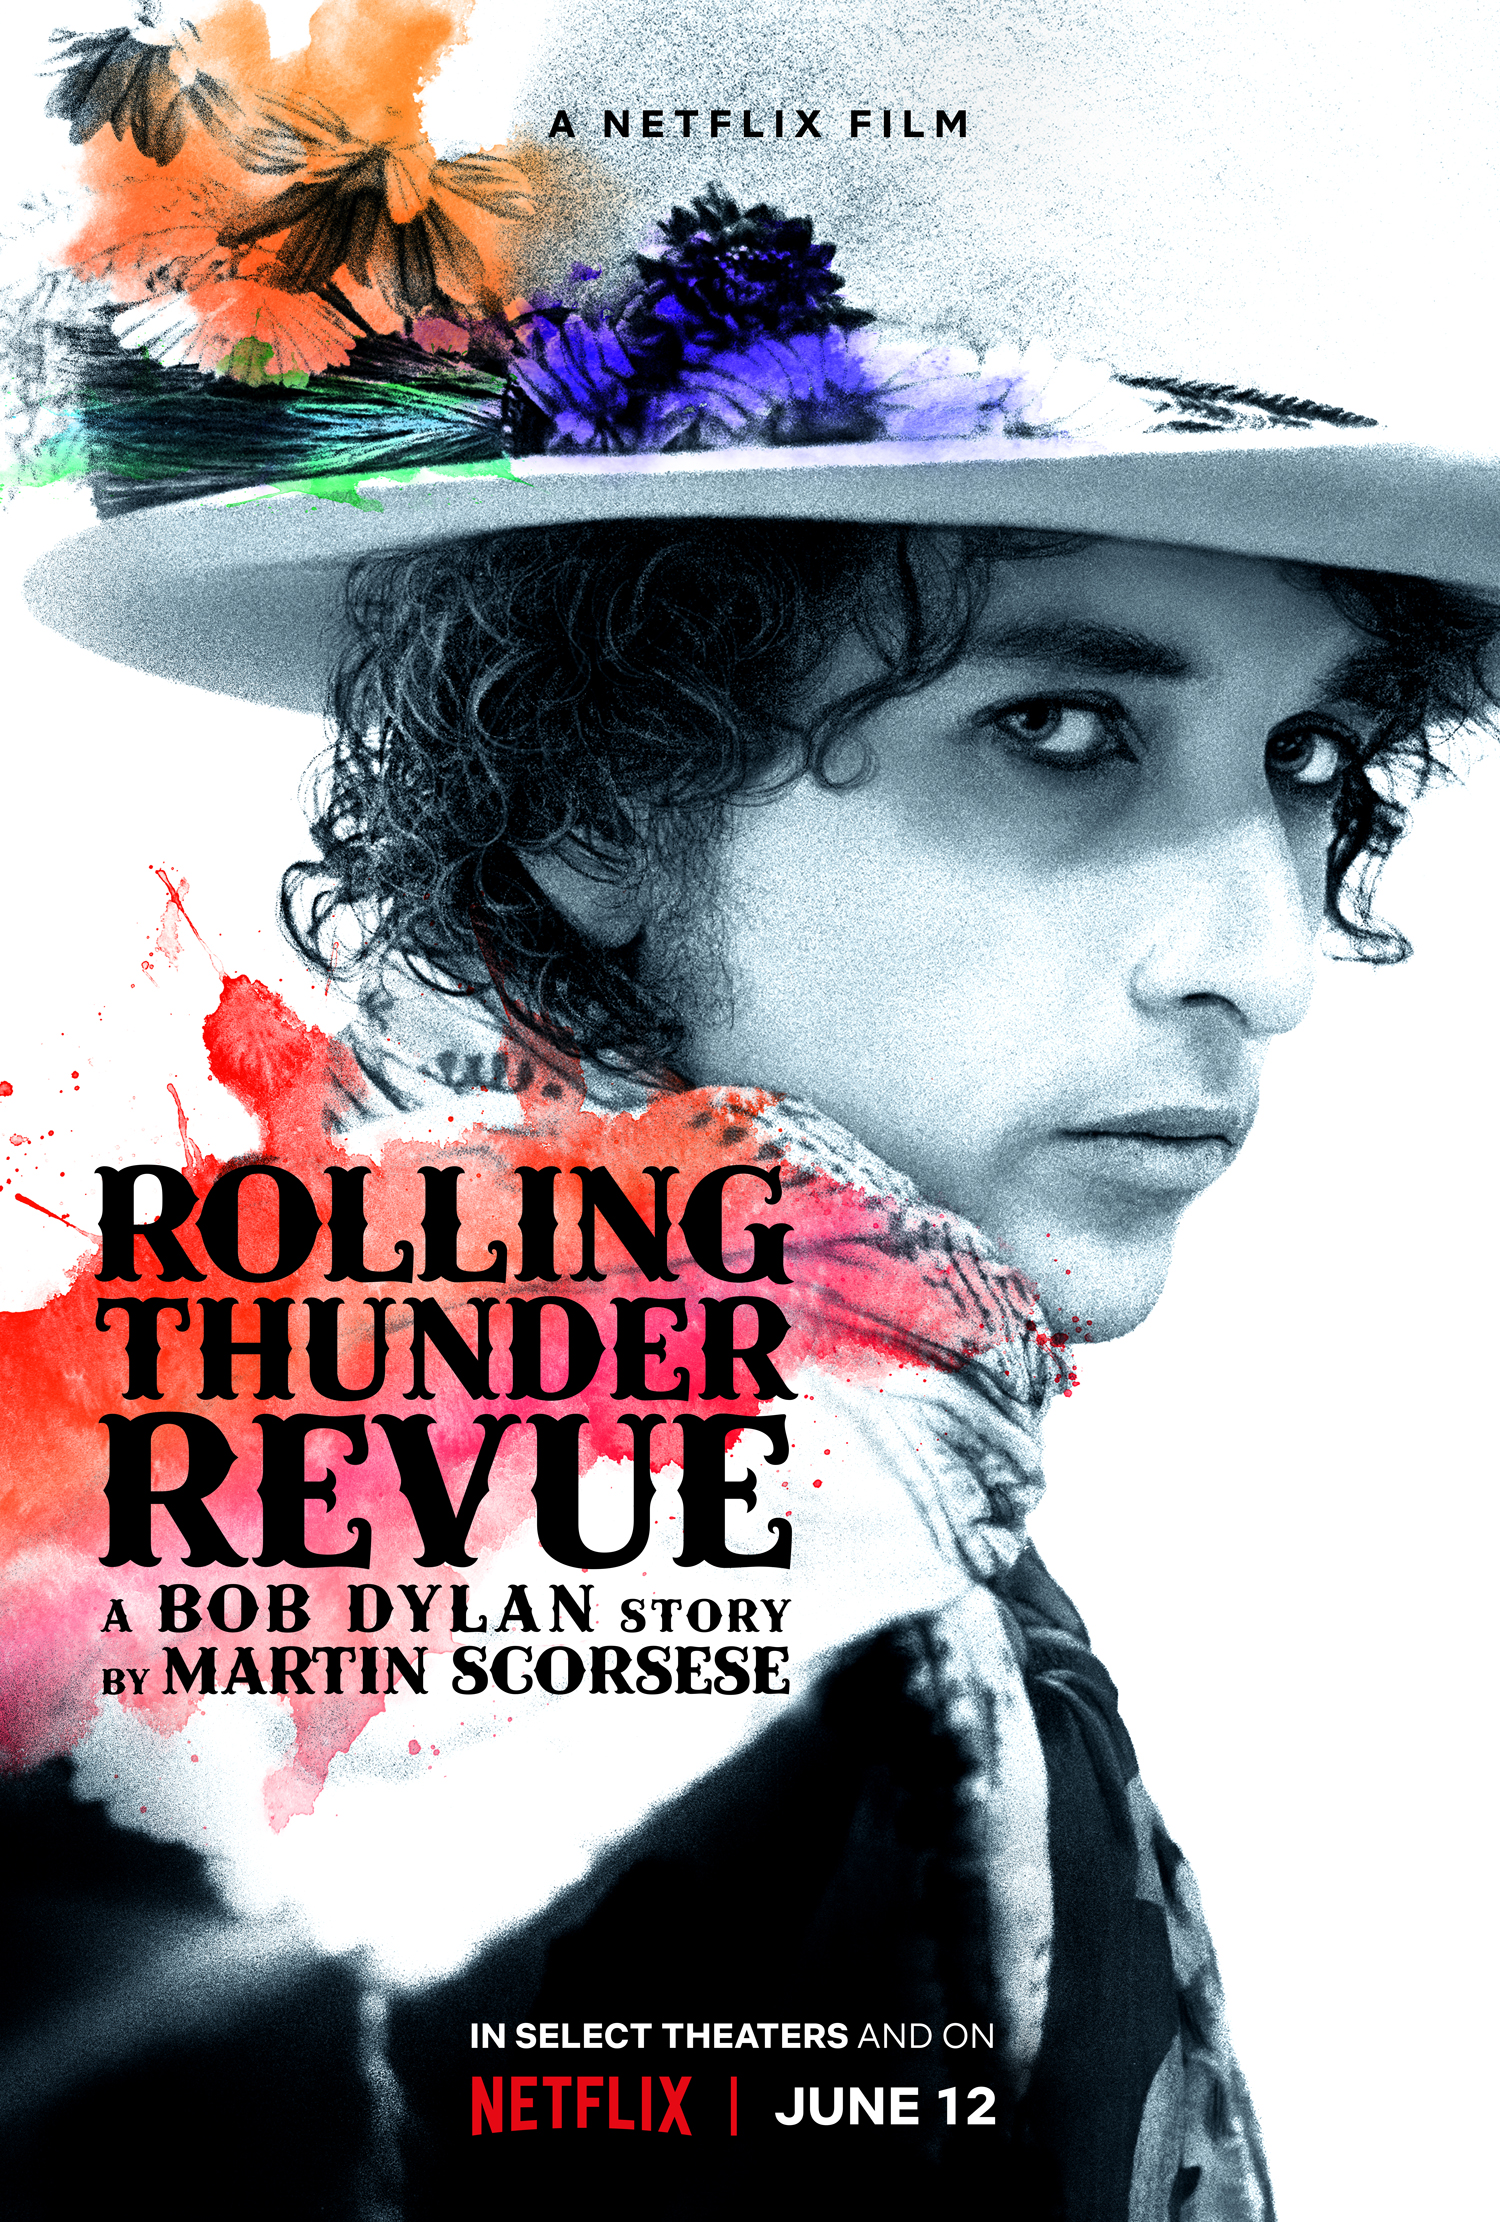 Nonton film Rolling Thunder Revue: A Bob Dylan Story by Martin Scorsese layarkaca21 indoxx1 ganool online streaming terbaru